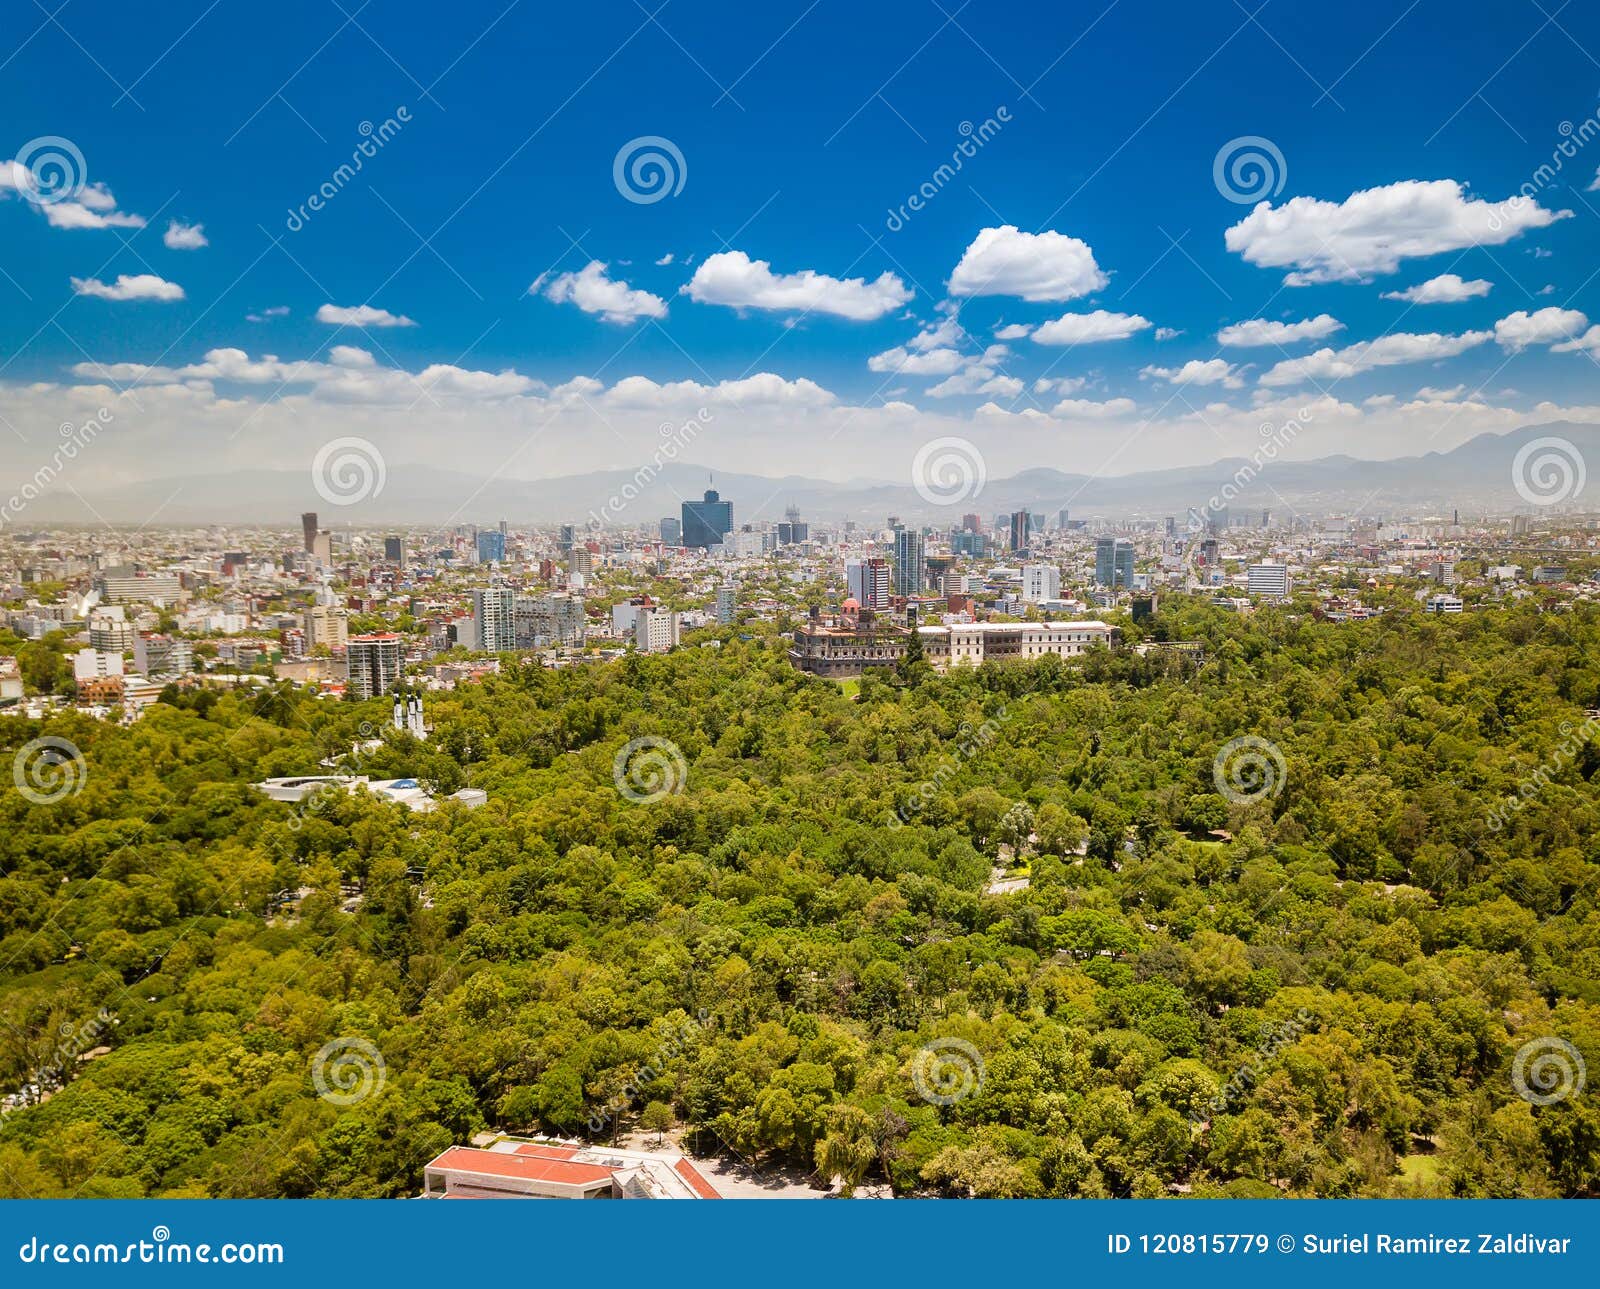 mexico city - chapultepec castle and park